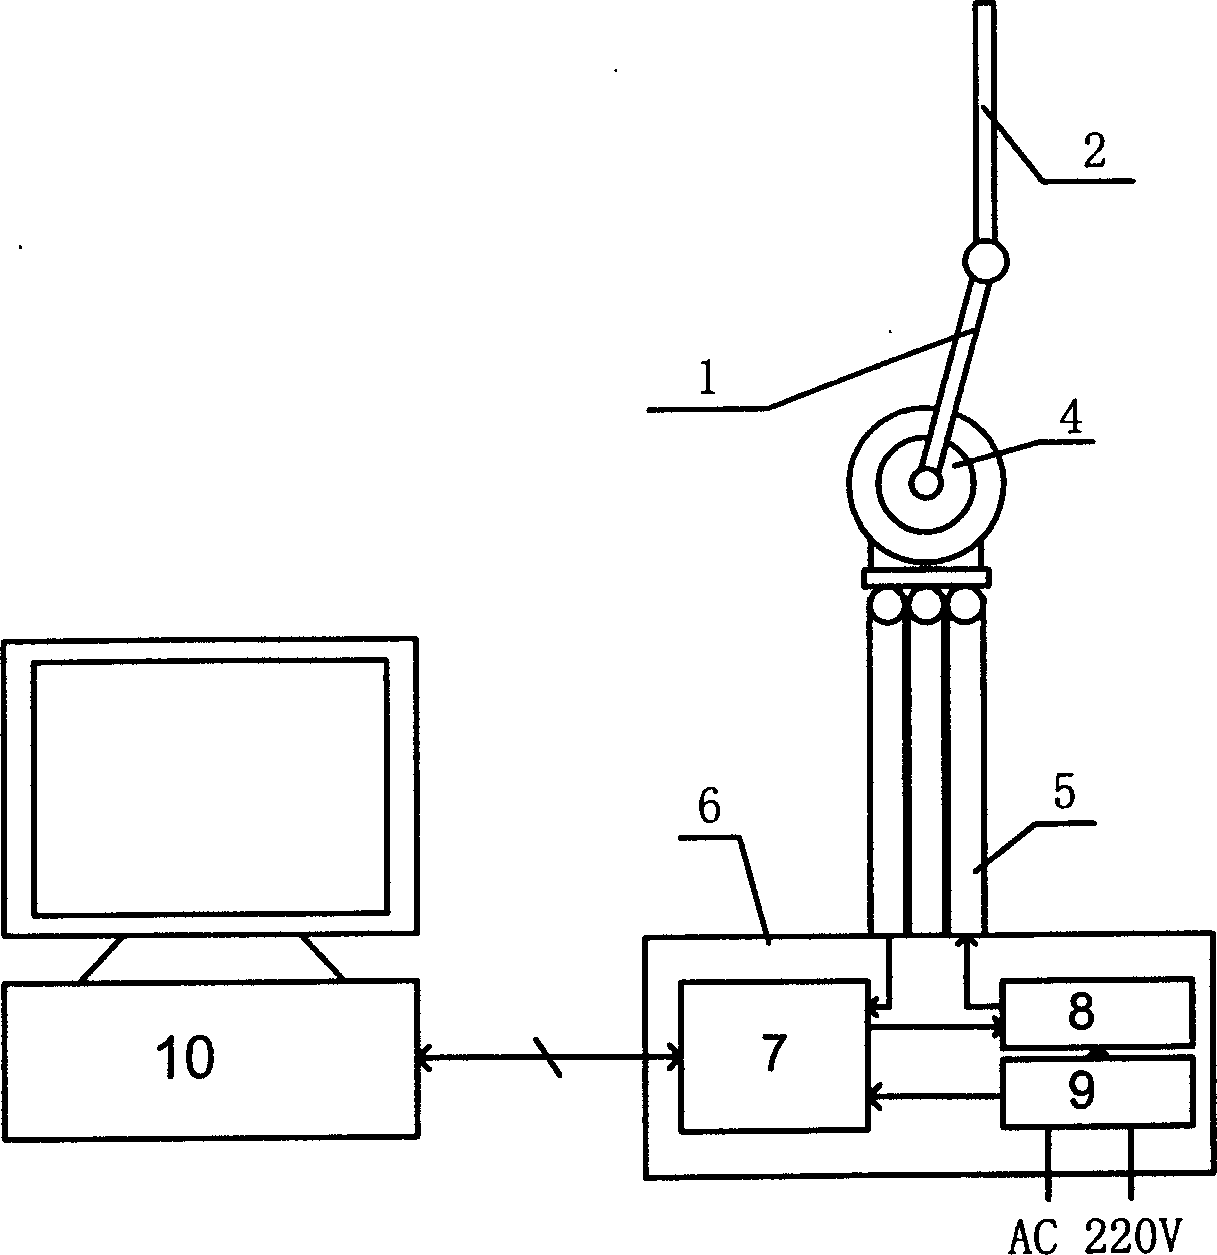 Rotary inverted pendulum